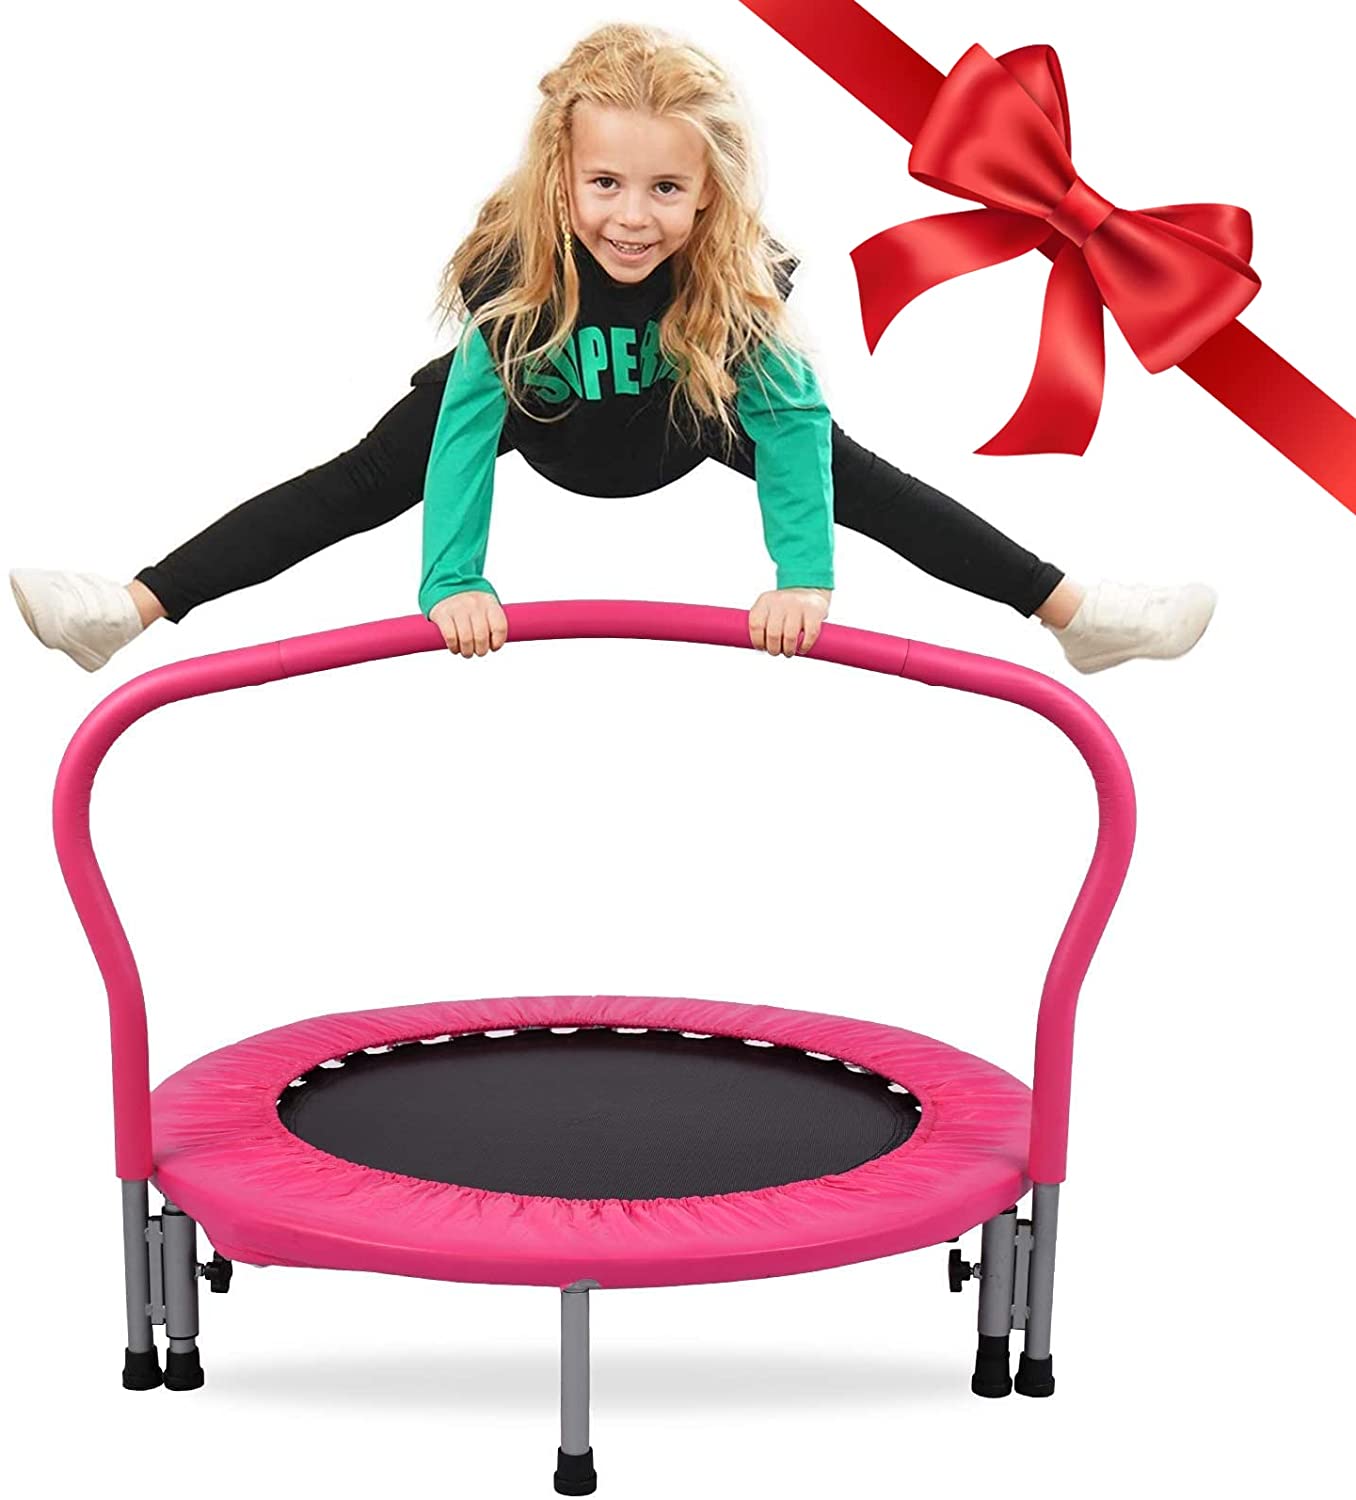 36" Kids Trampoline Mini Fitness Trampoline for Children Indoor Outdoor Trampoline Pink